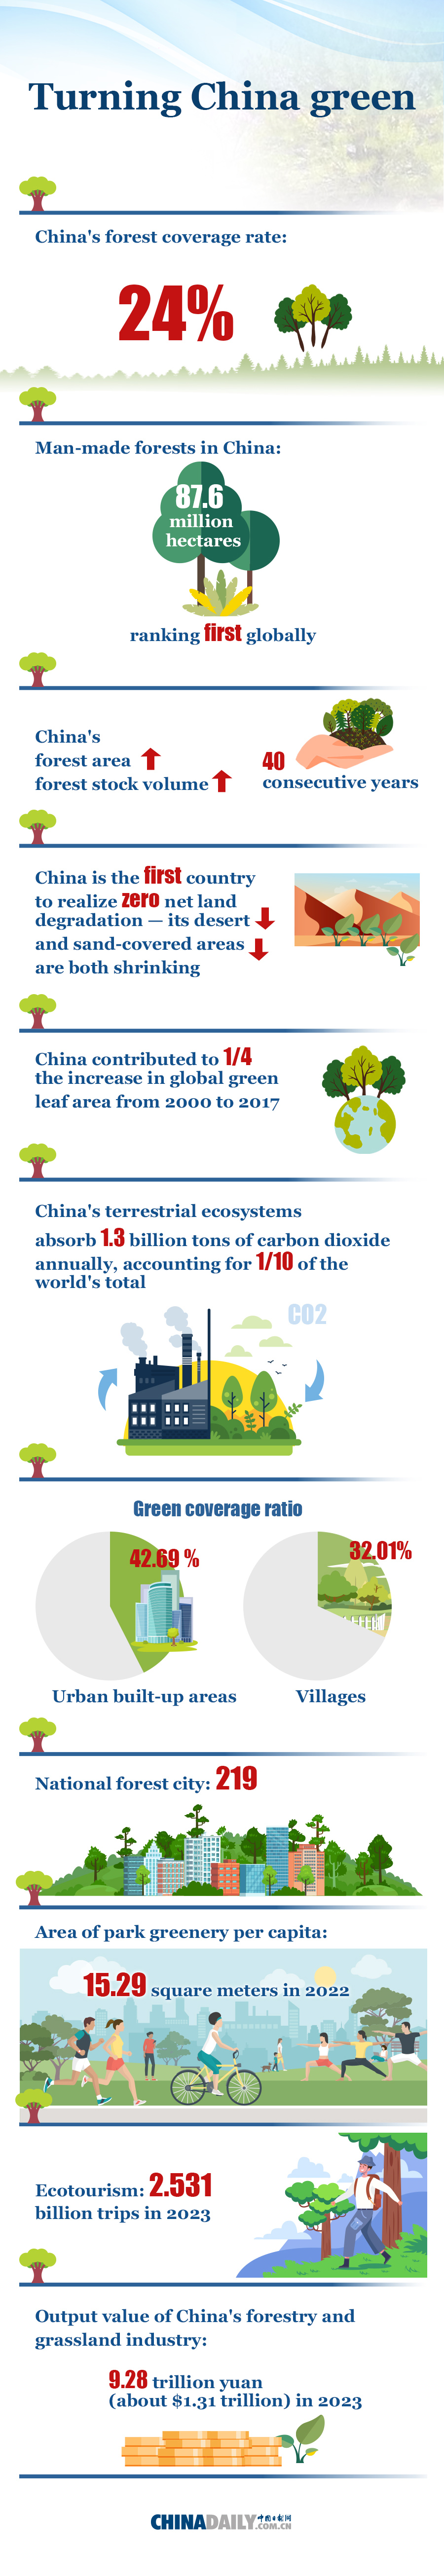 World Environment Day: Turning China green